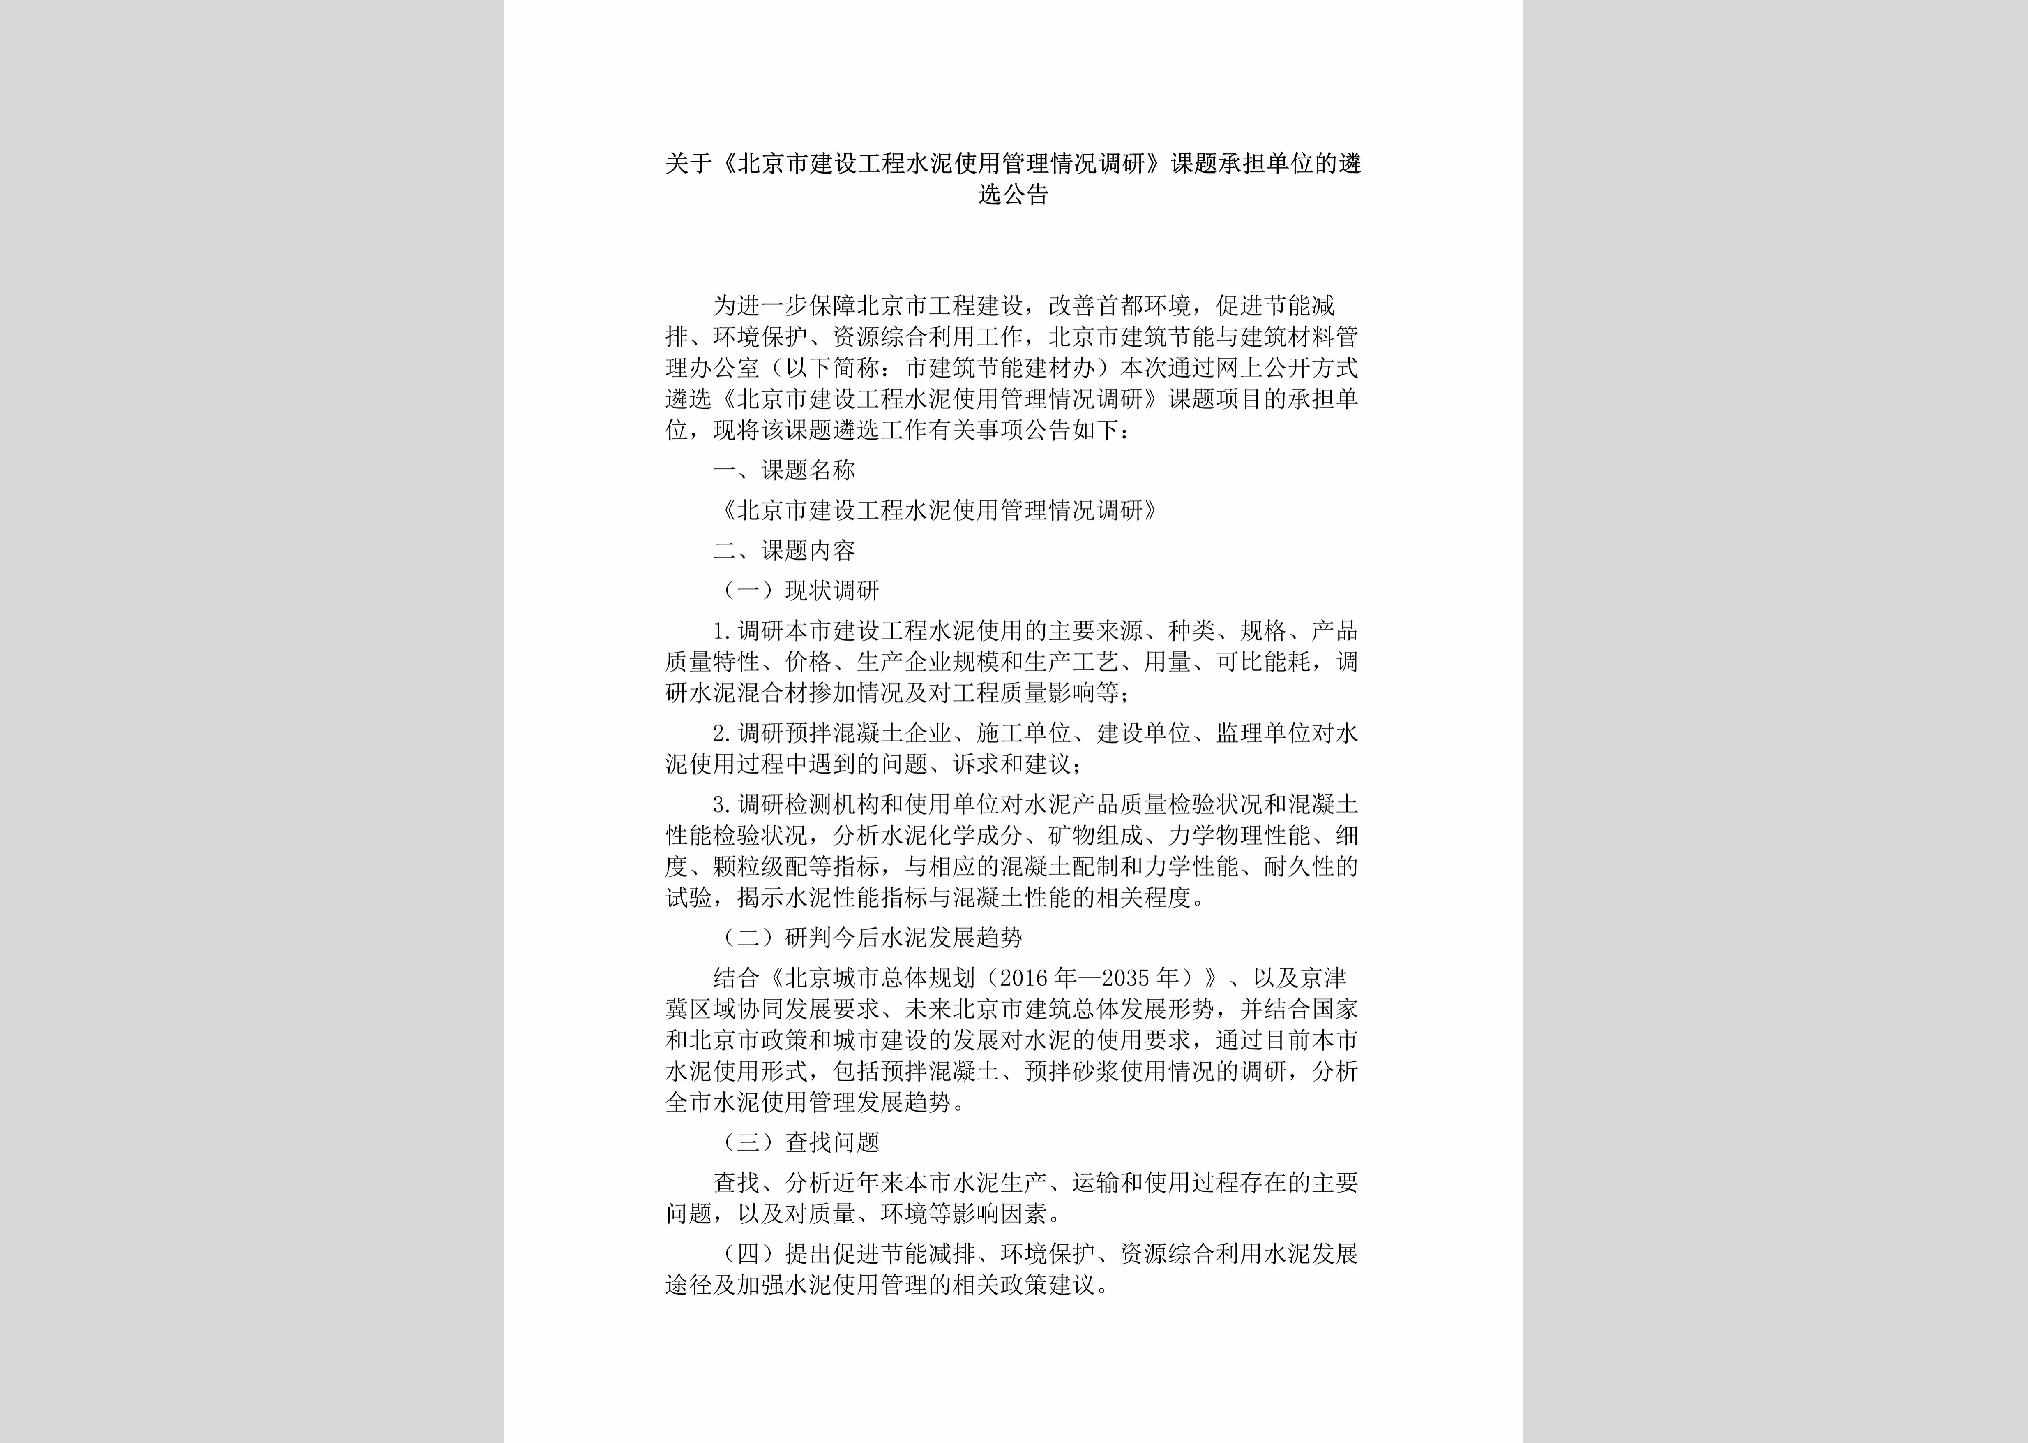 BJ-JSGCLXGG-2018：关于《北京市建设工程水泥使用管理情况调研》课题承担单位的遴选公告